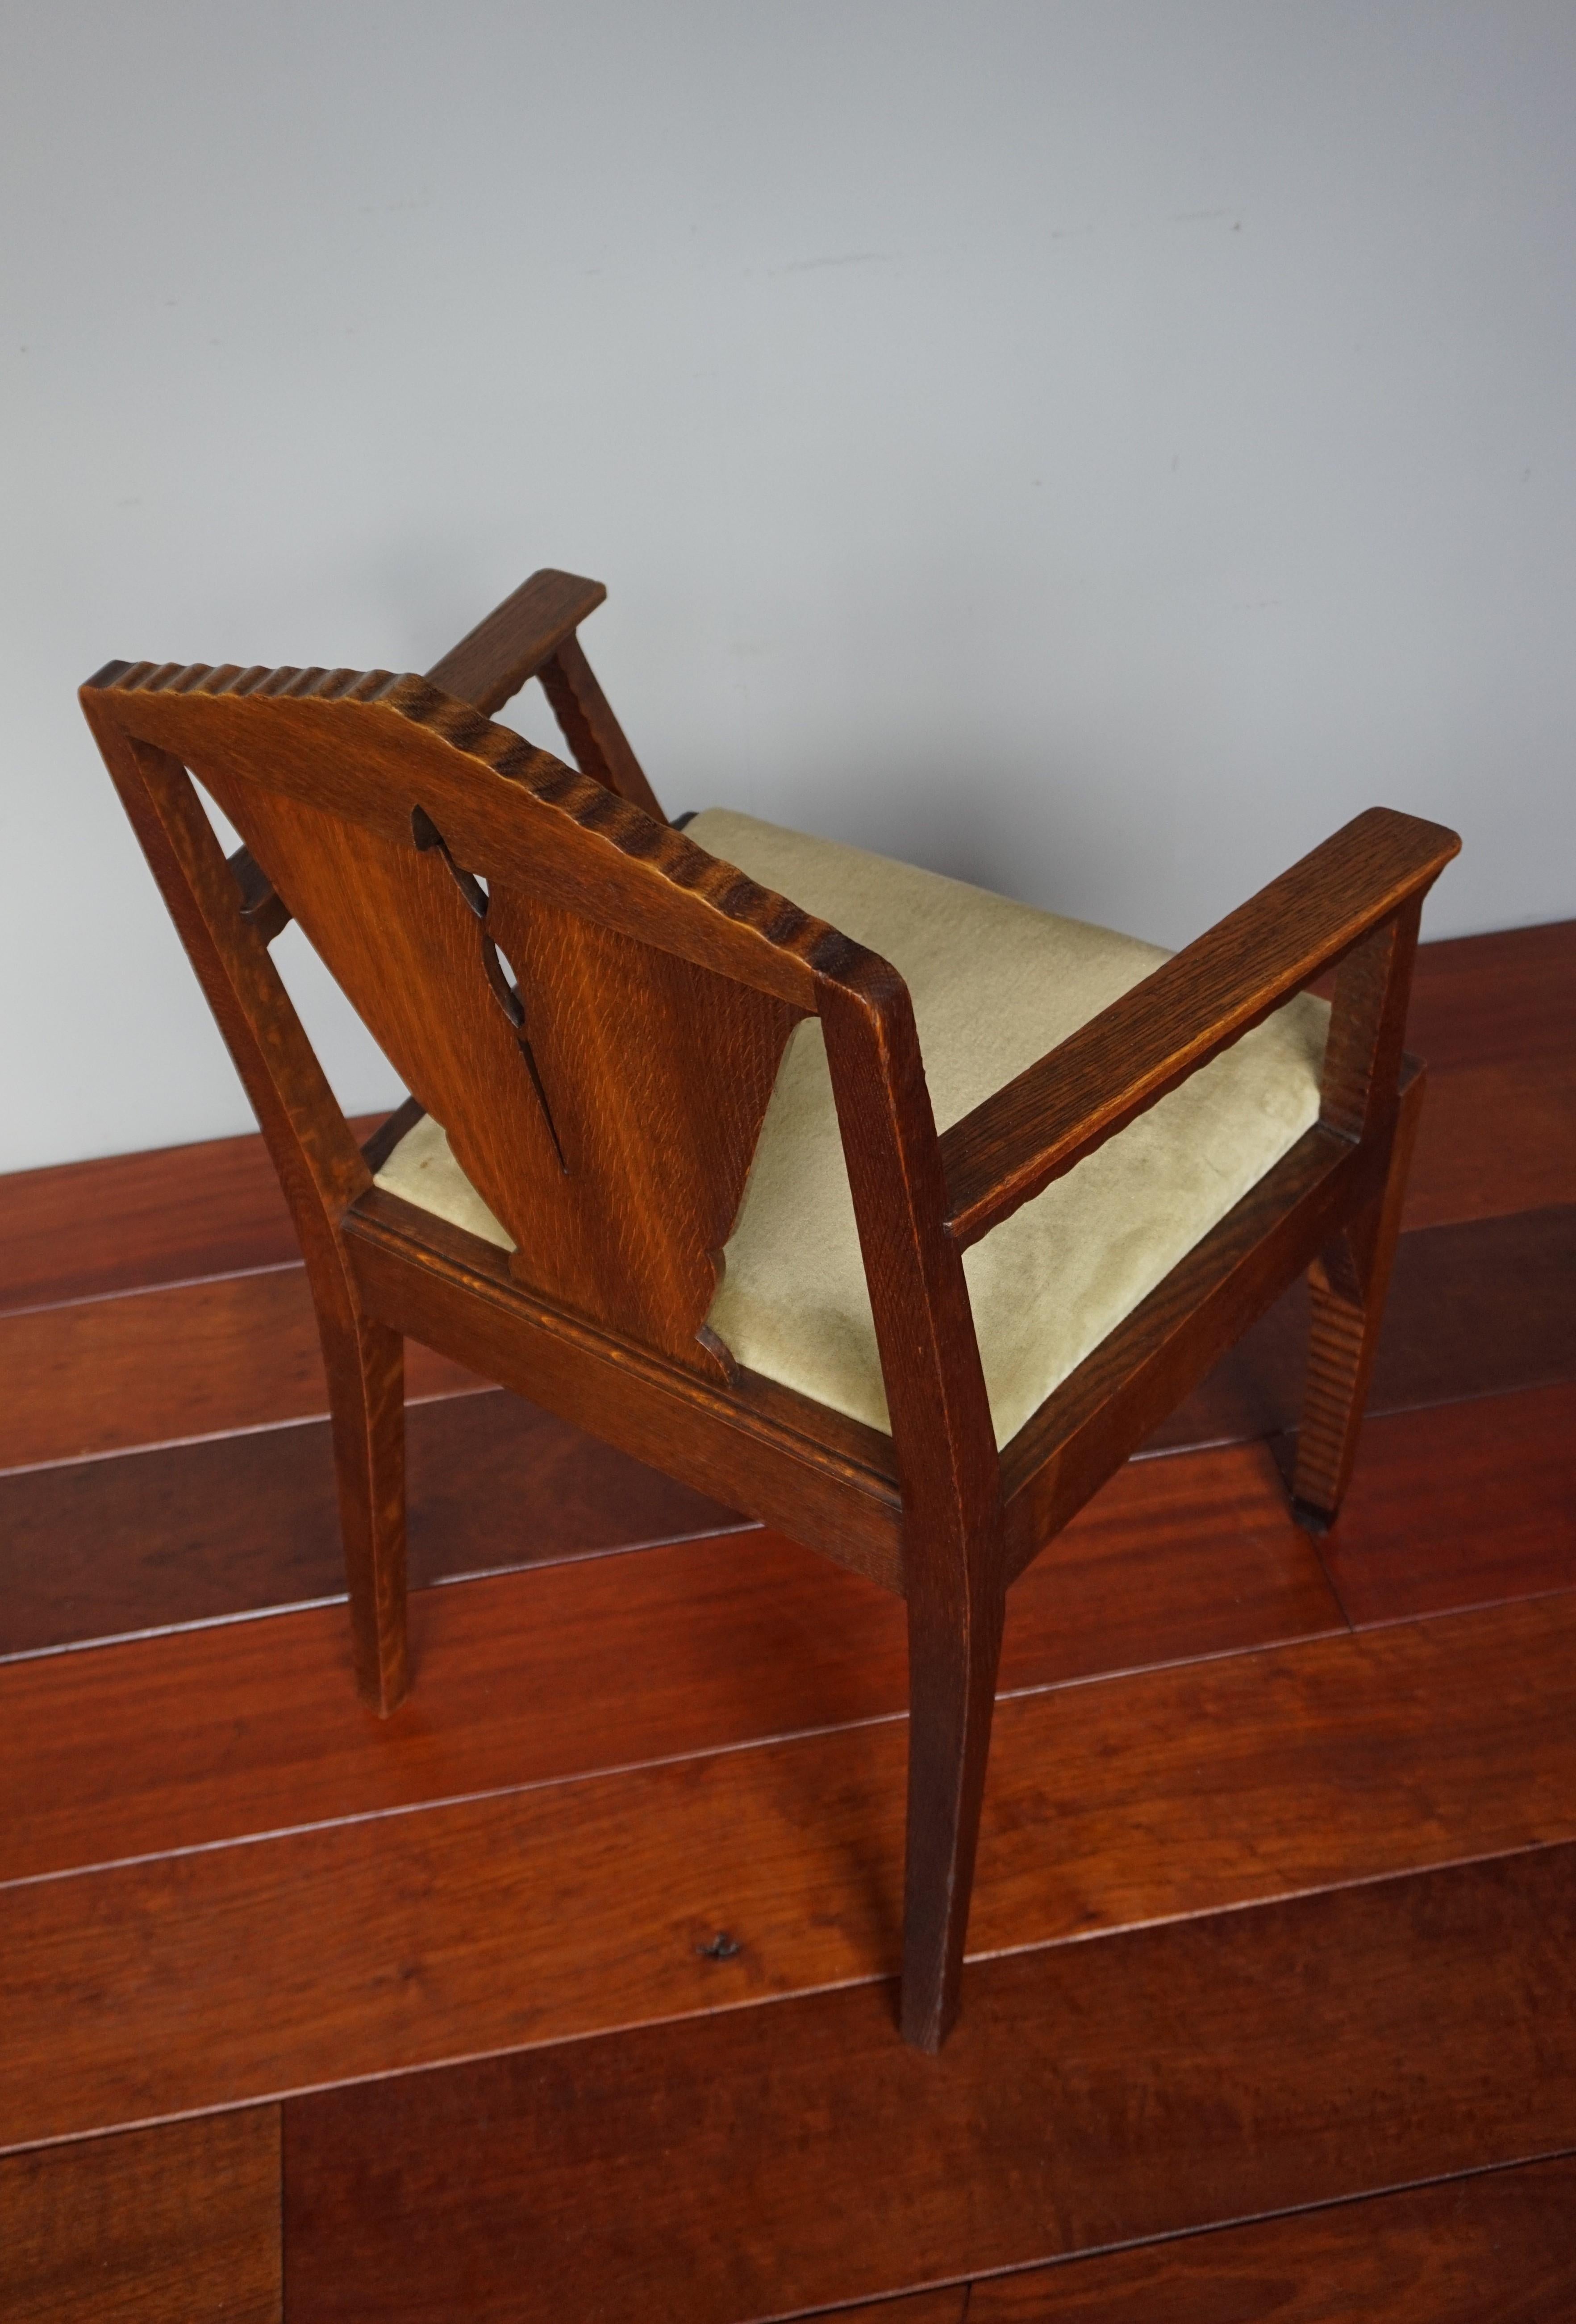 Brilliant Design Dutch Arts & Crafts Oak Desk Chair w. Original Upholstery 1910s For Sale 9